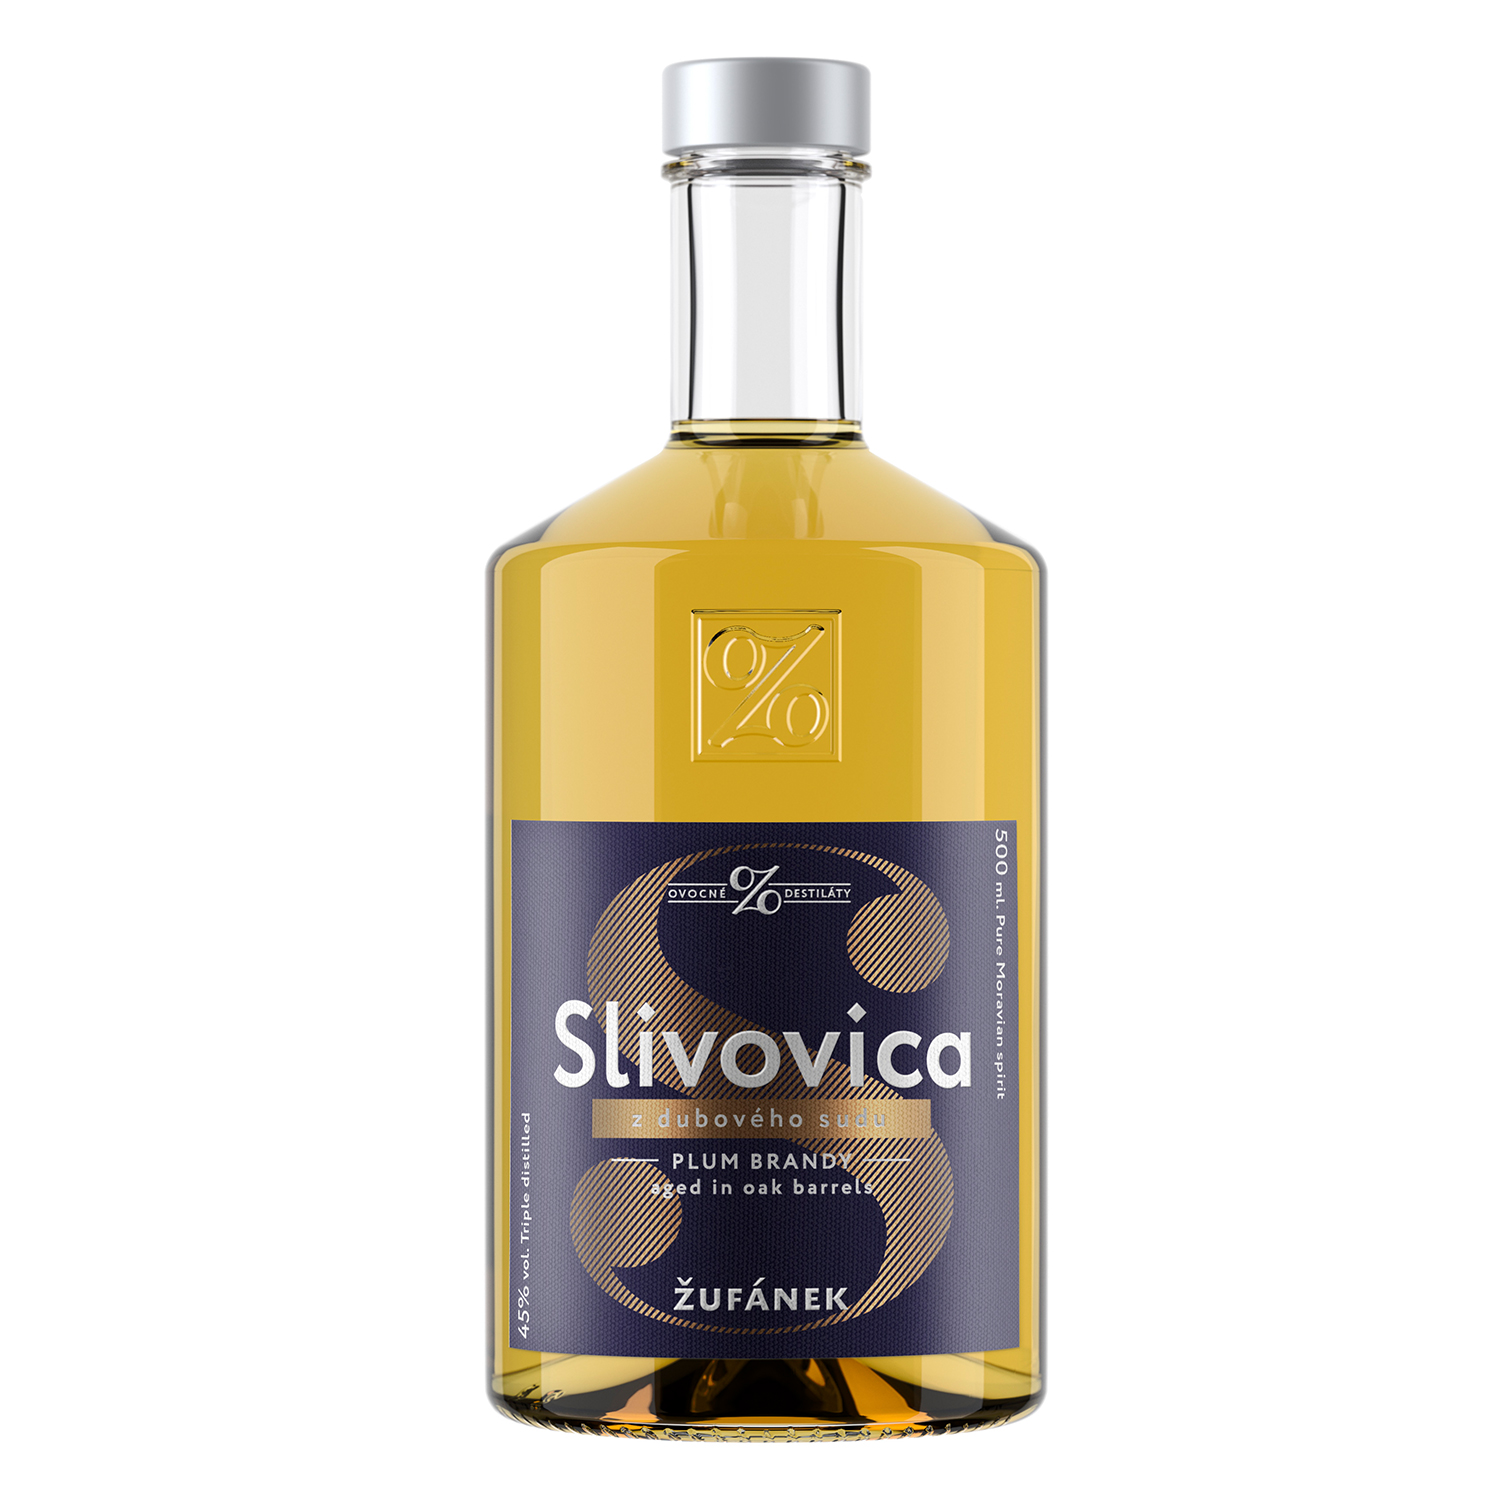 Slivovica - plum brandy barrel-aged